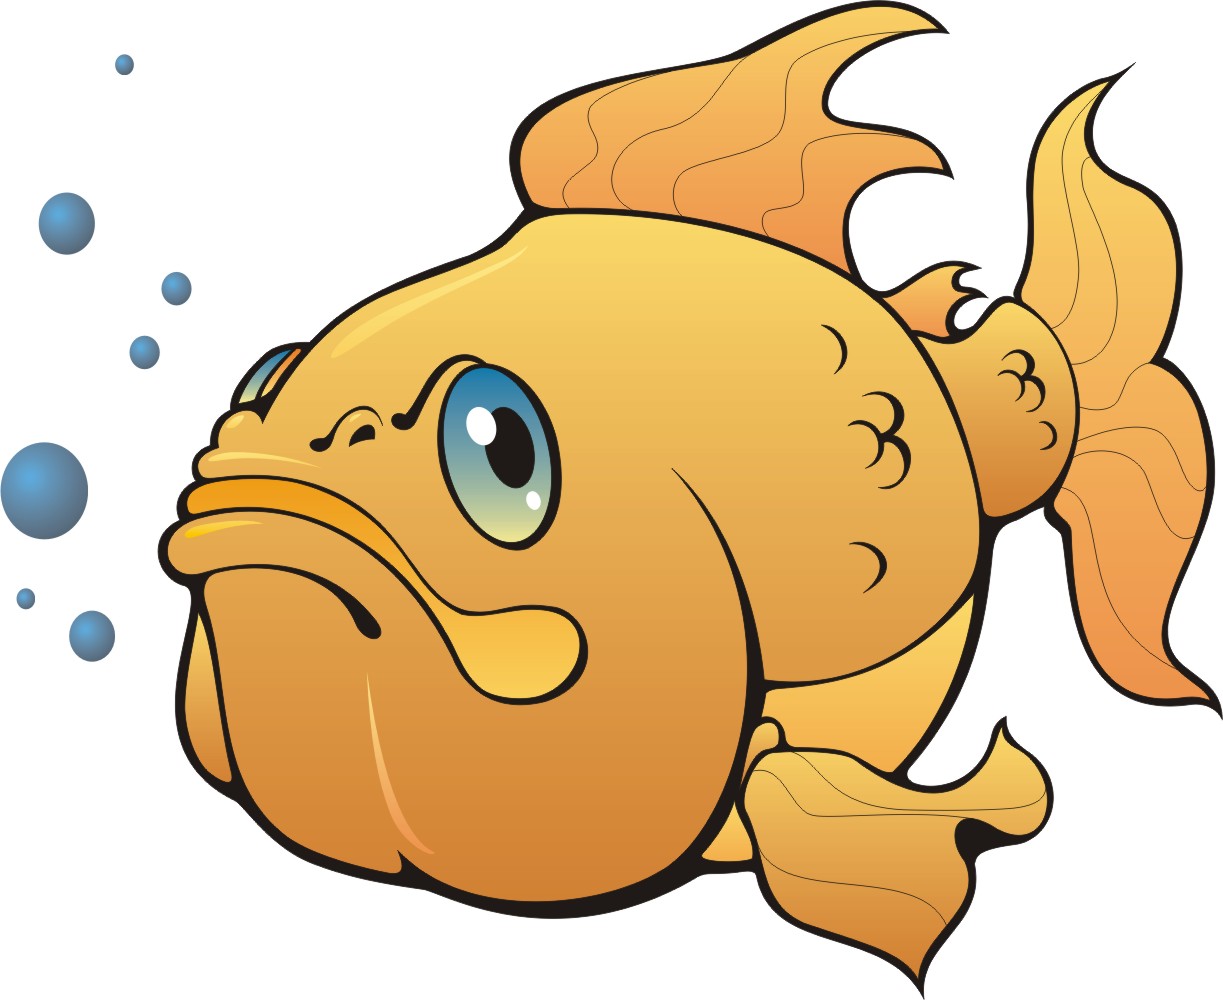 Free Funny Cartoon Fish, Download Free Funny Cartoon Fish png images